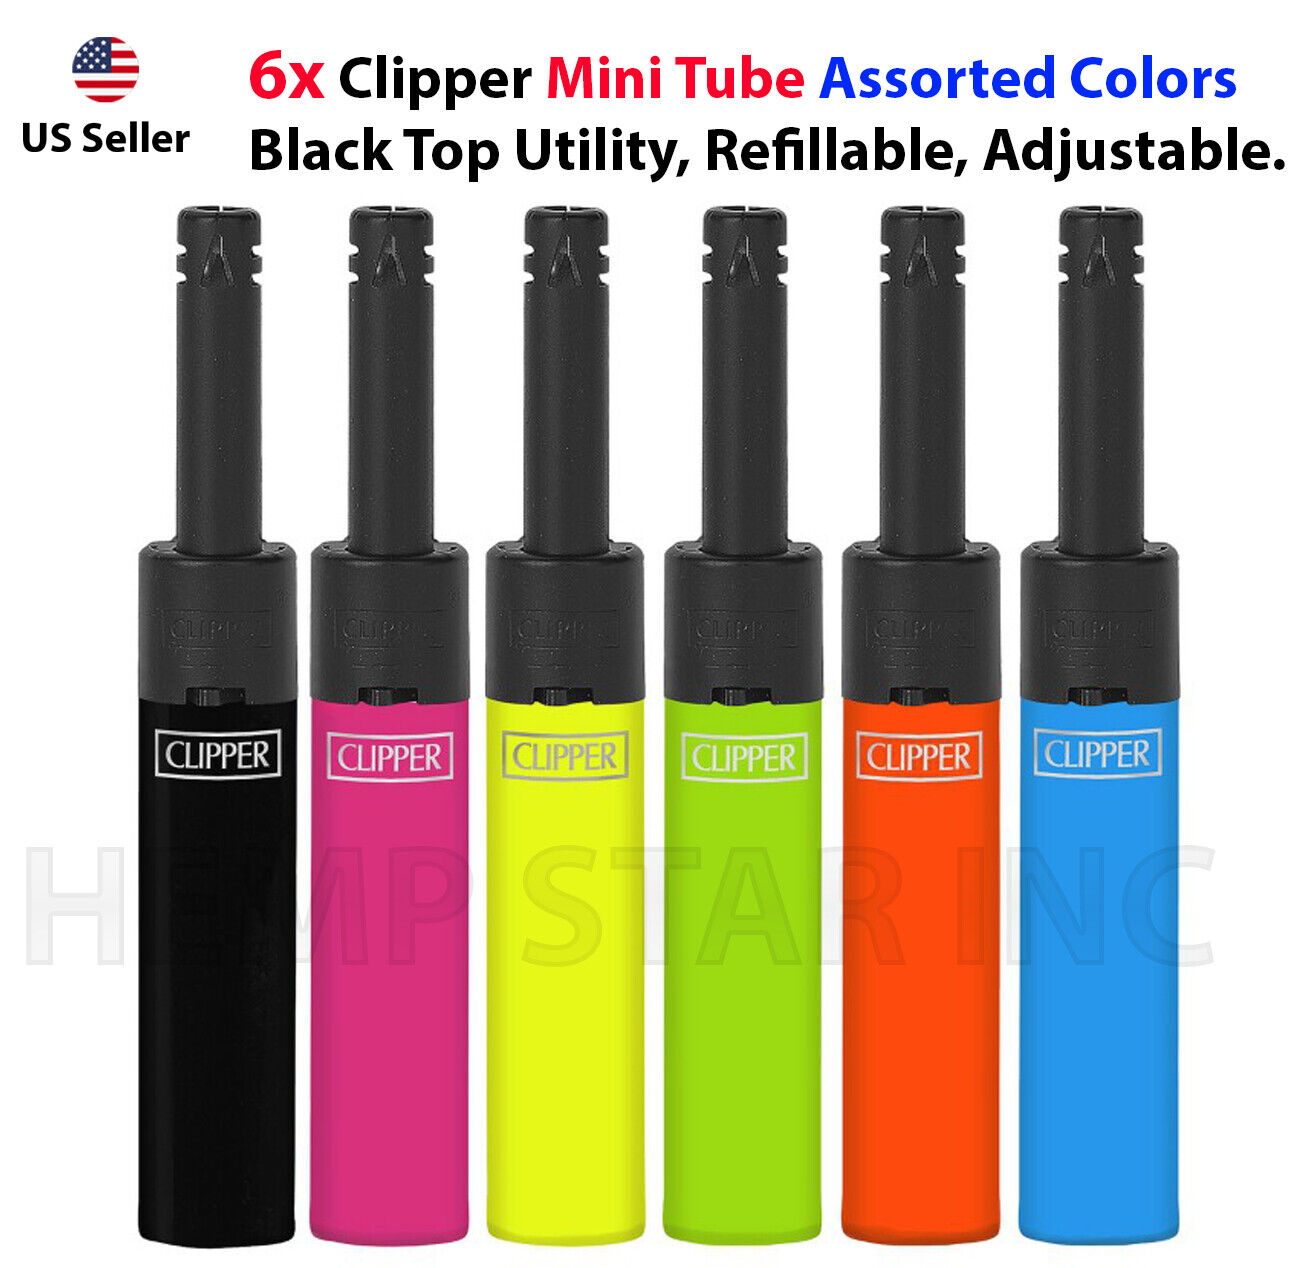 6x Clipper Mini Tube Assorted Colors Black Top Utility Refillable, Adjustable.